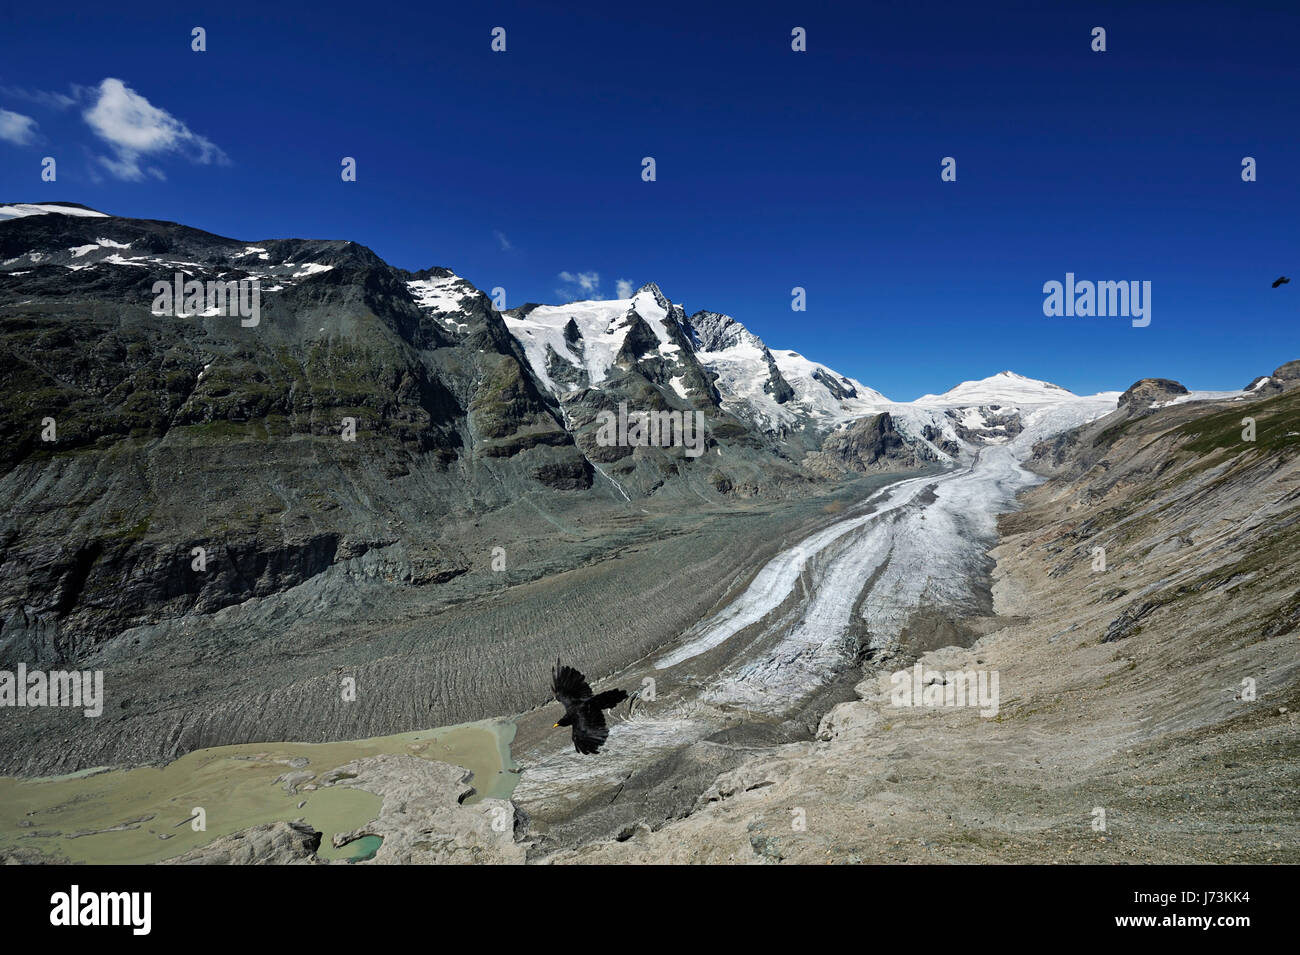 national park summit climax peak glacier ringer scenery countryside nature bird Stock Photo